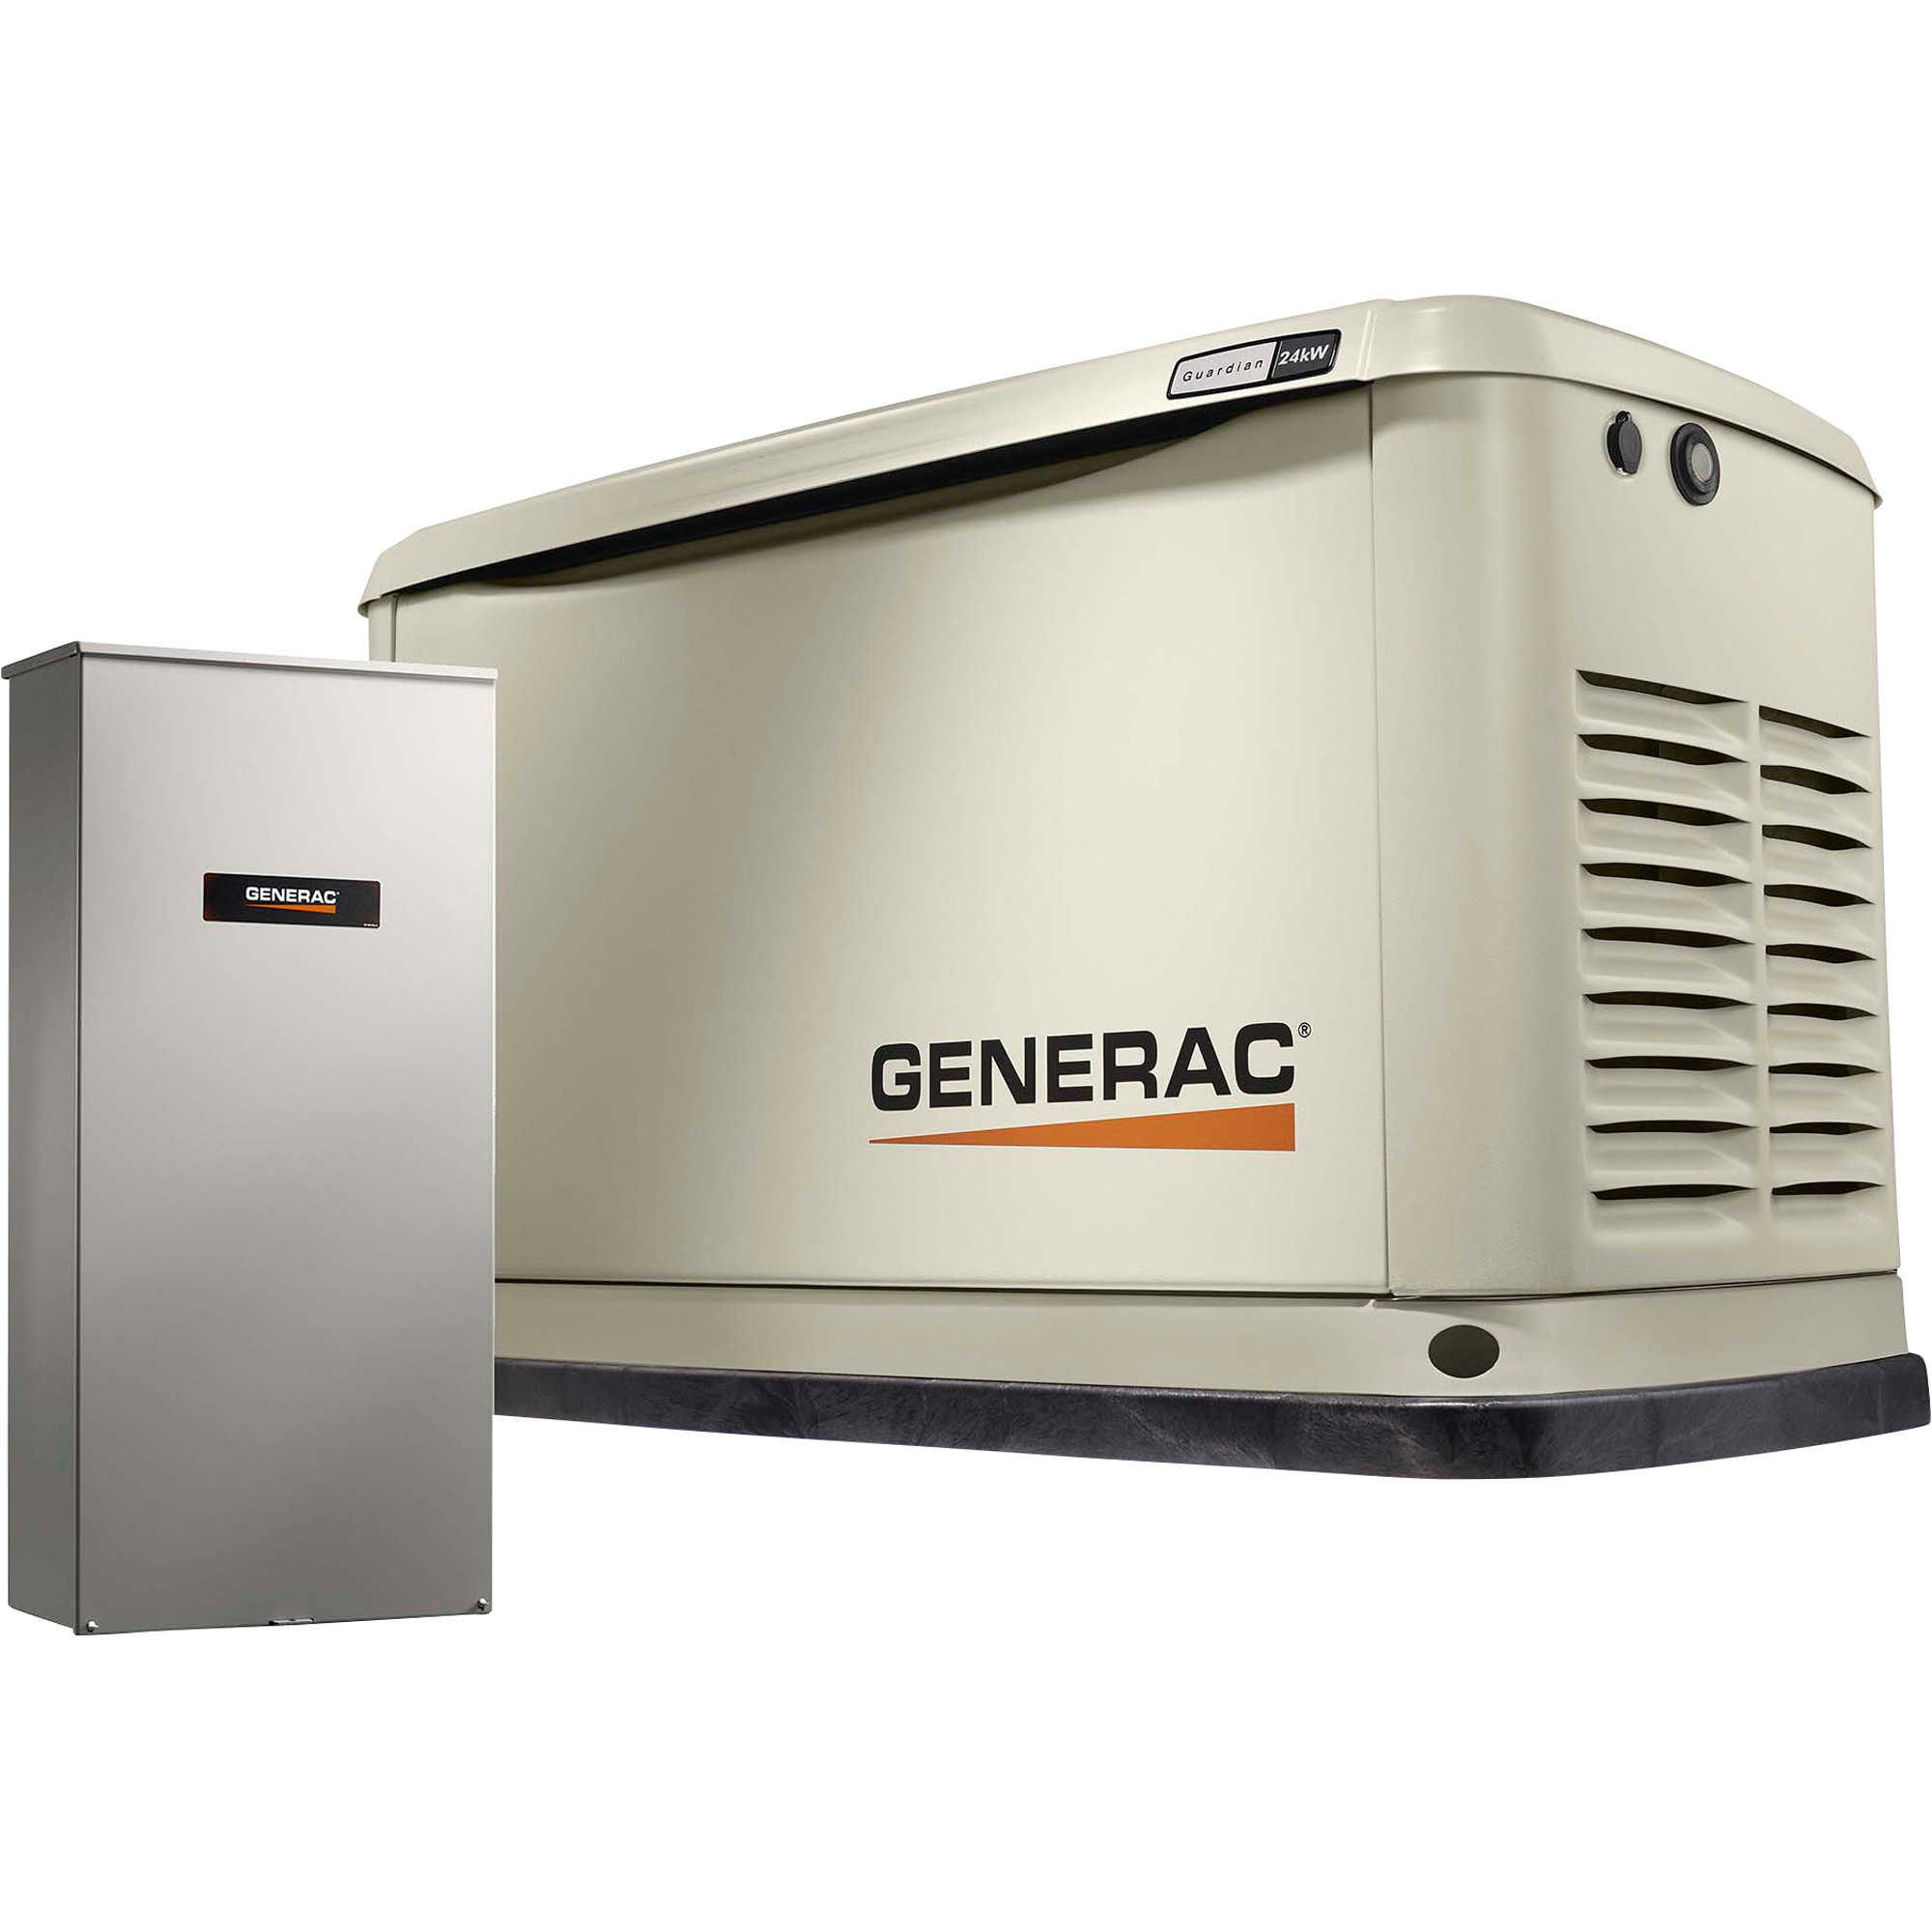 Guardian Series Home Standby Generator, 24kW (LP)/21kW (NG), 200 Amp Transfer Switch, Aluminum Enclosure, Model - Generac 7210